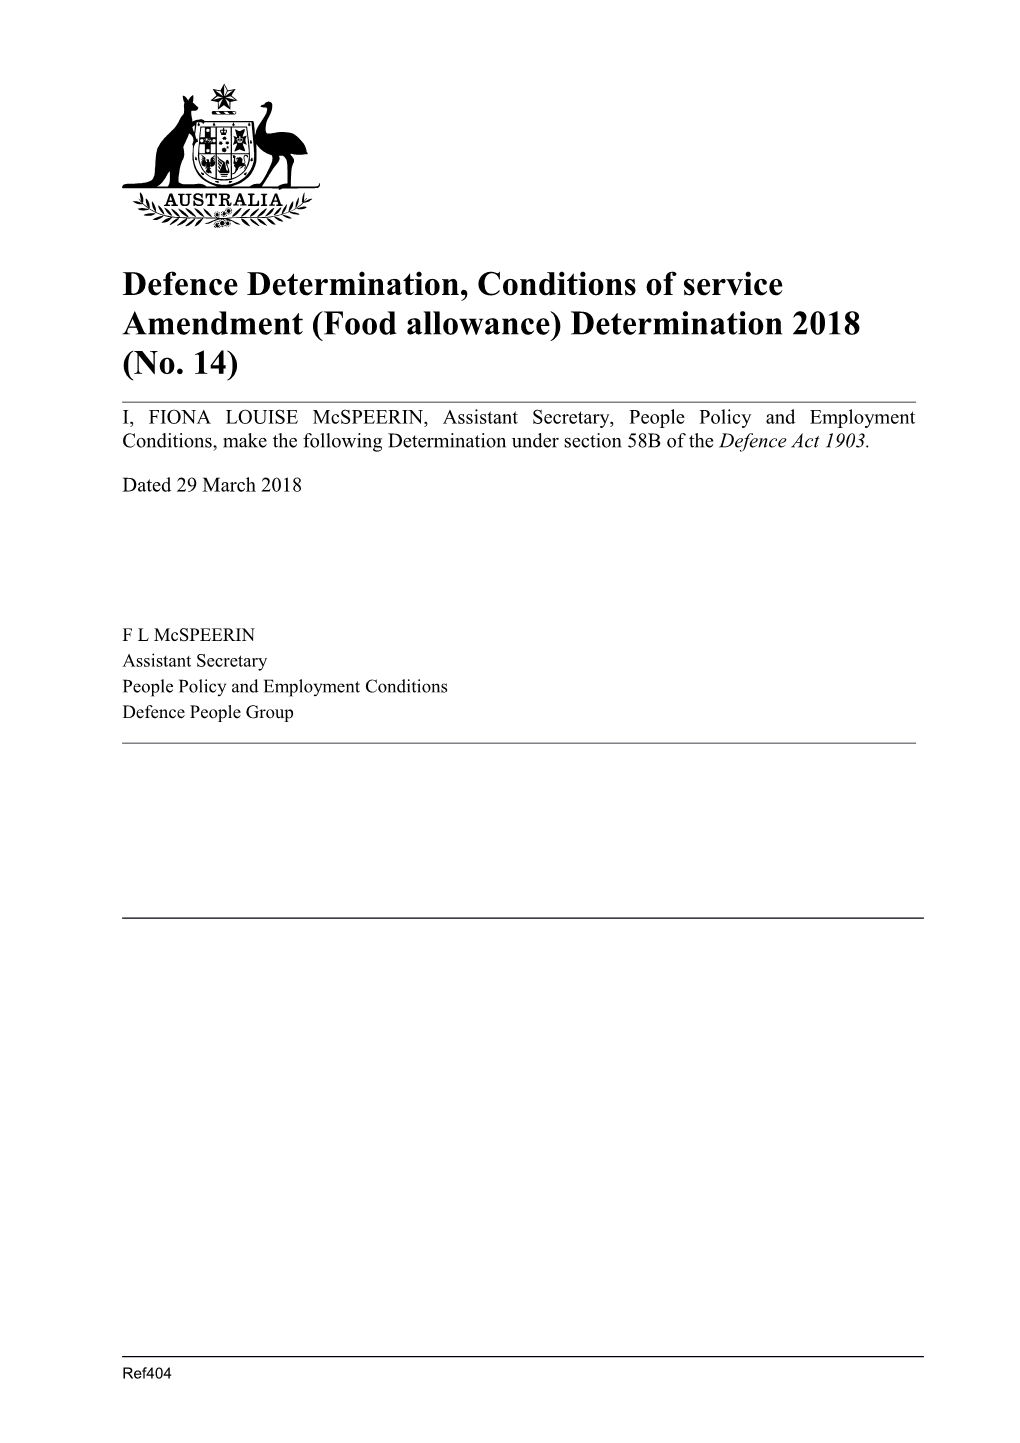 Defence Determination, Conditions of Service Amendment (Food Allowance) Determination